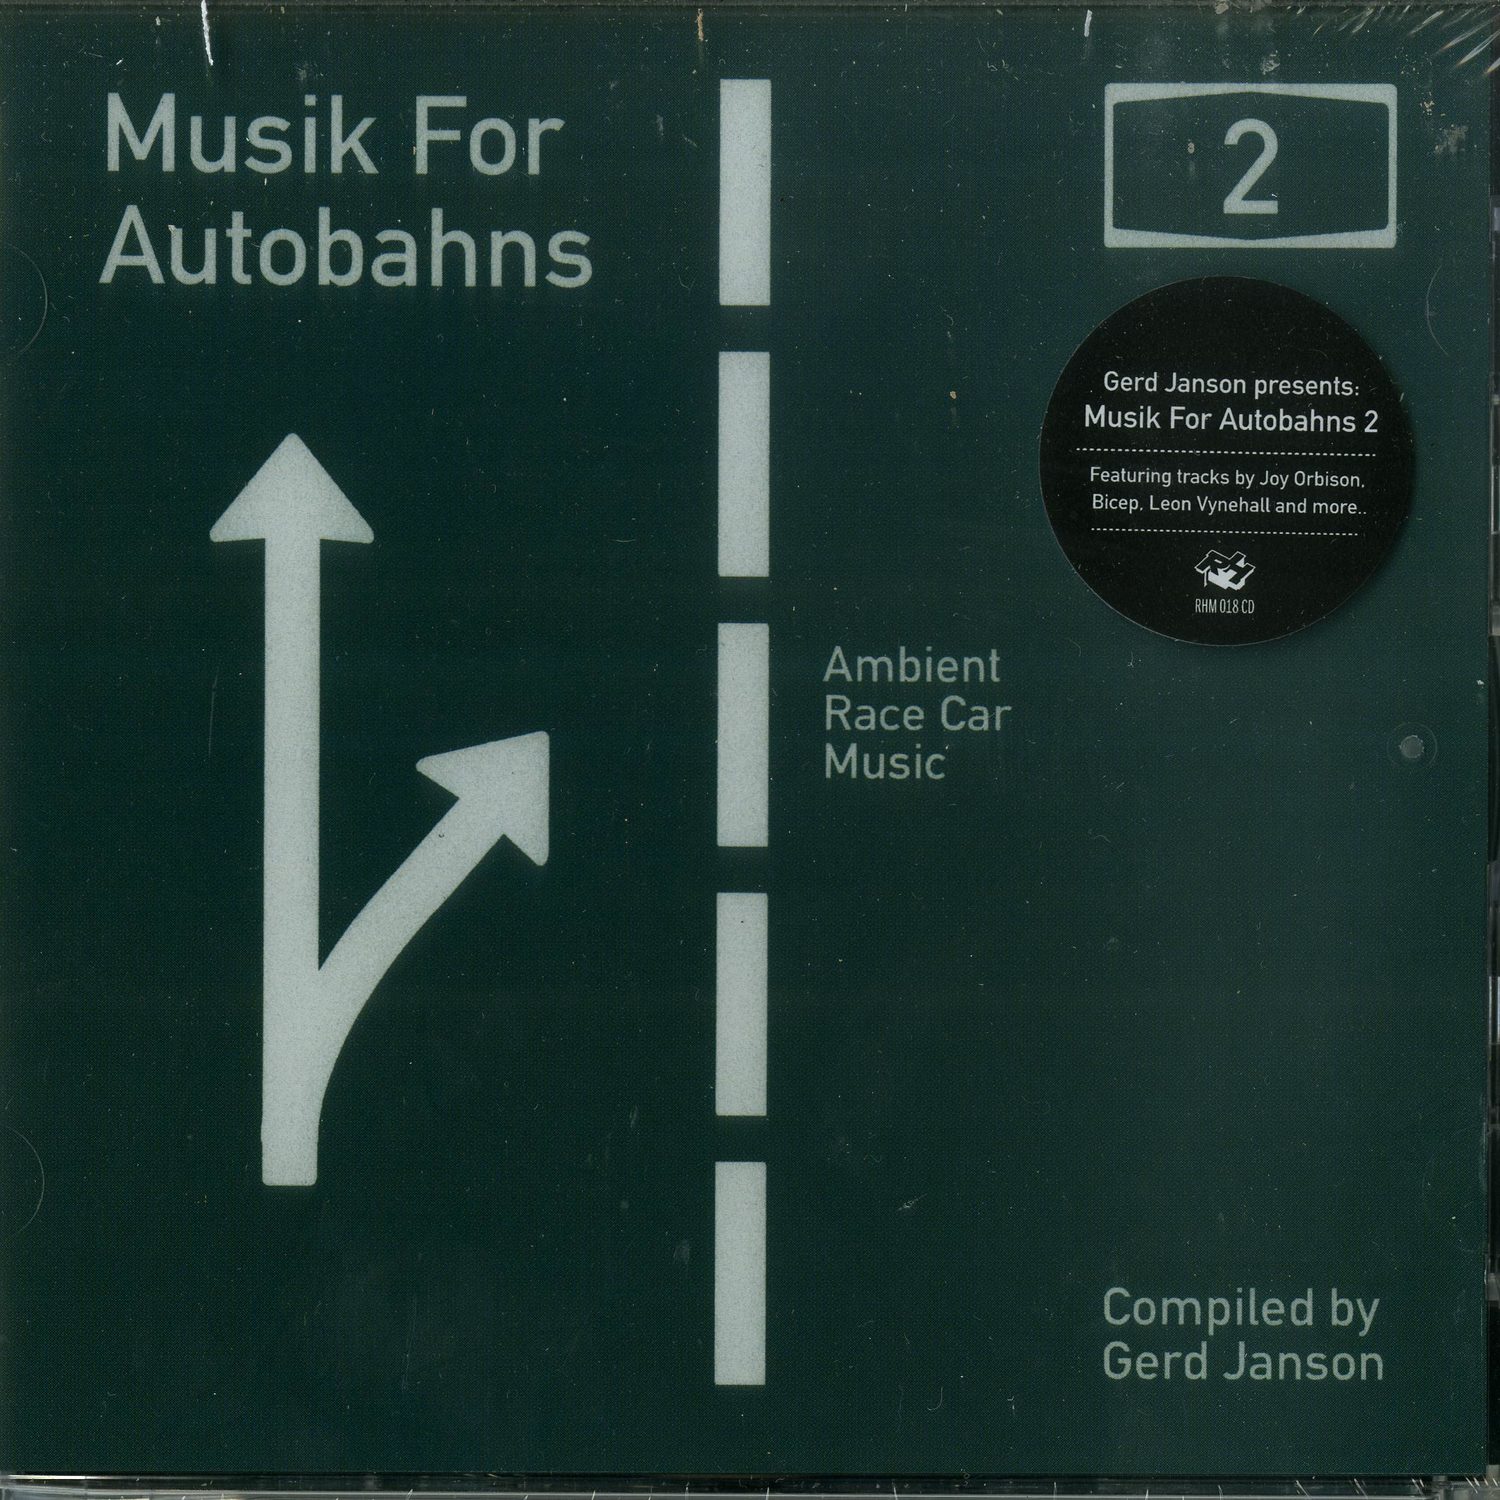 Gerd Janson Presents - MUSIK FOR AUTOBAHNS 2 